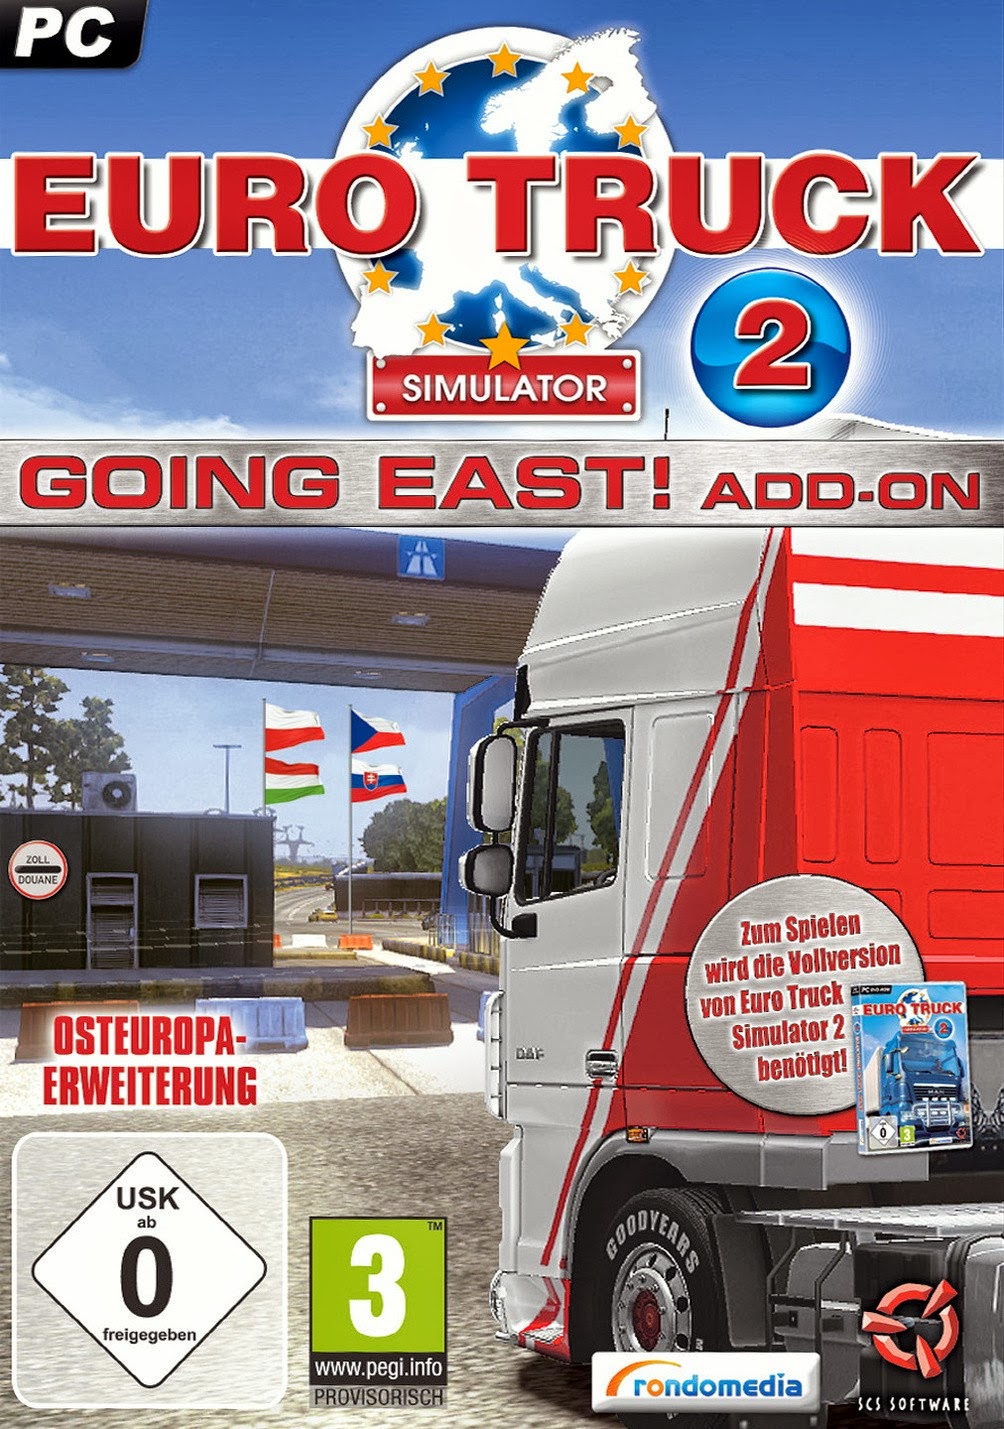 euro truck simulator 2 game download free